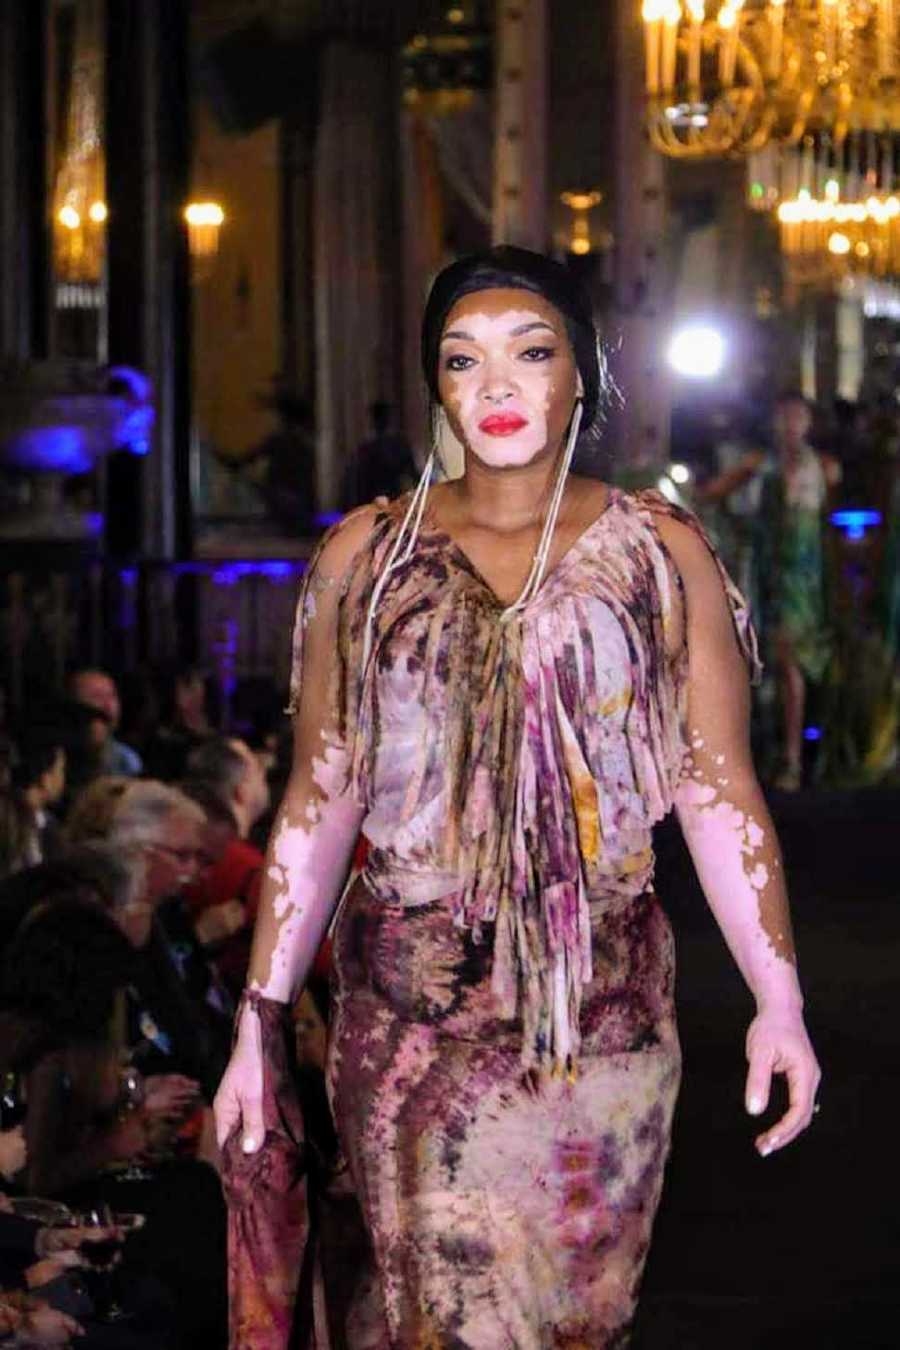 Woman with vitiligo walks on runway